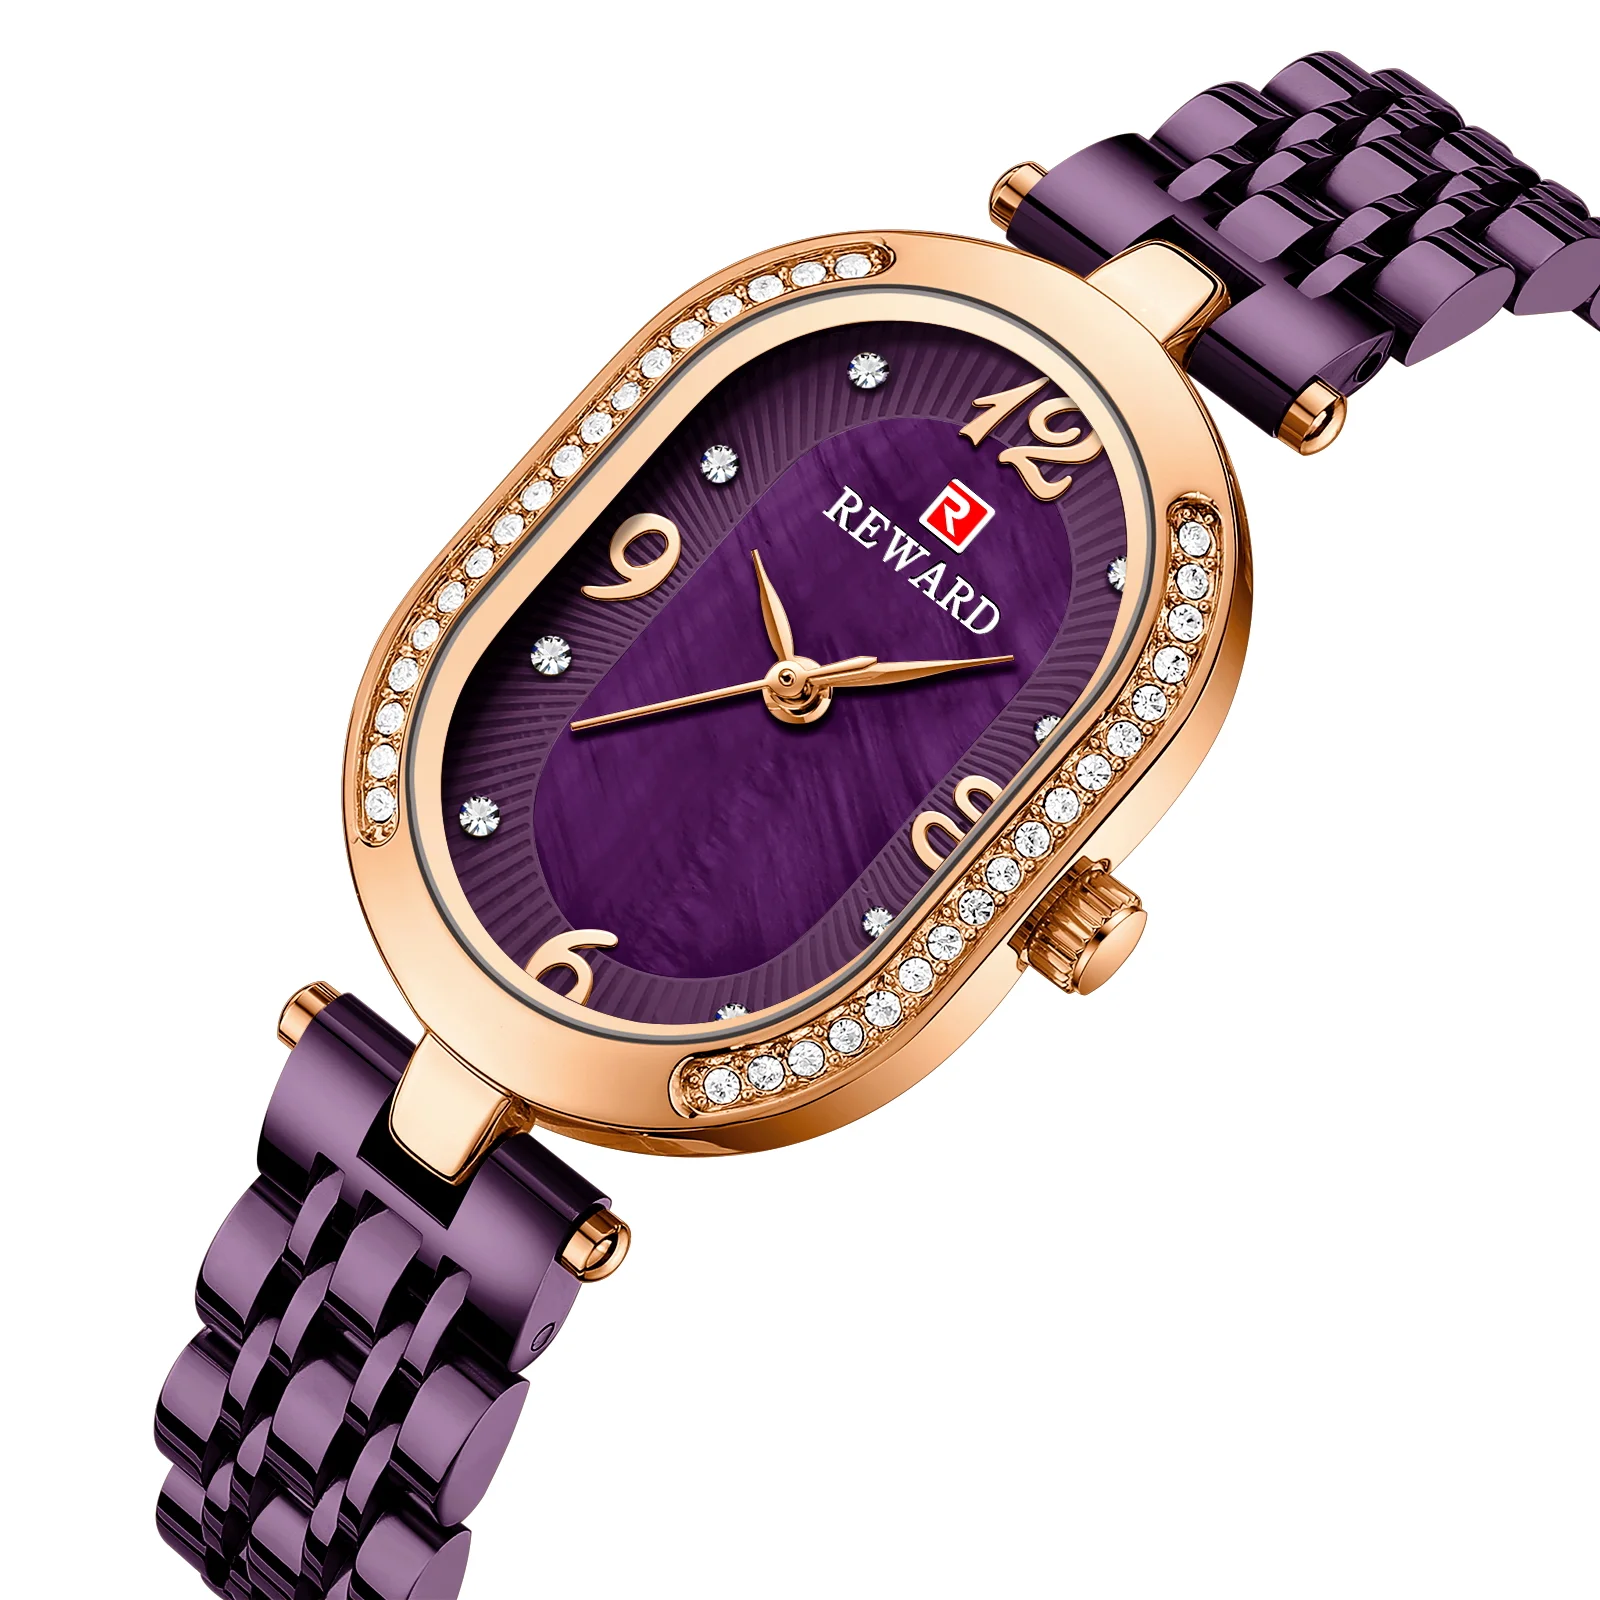 REWARD HOT Sale Women Watches Top Brand Luxury Stainless Steel Strap Wrist watch Female Quartz Ladies Watch Wife For Girl RD21058L